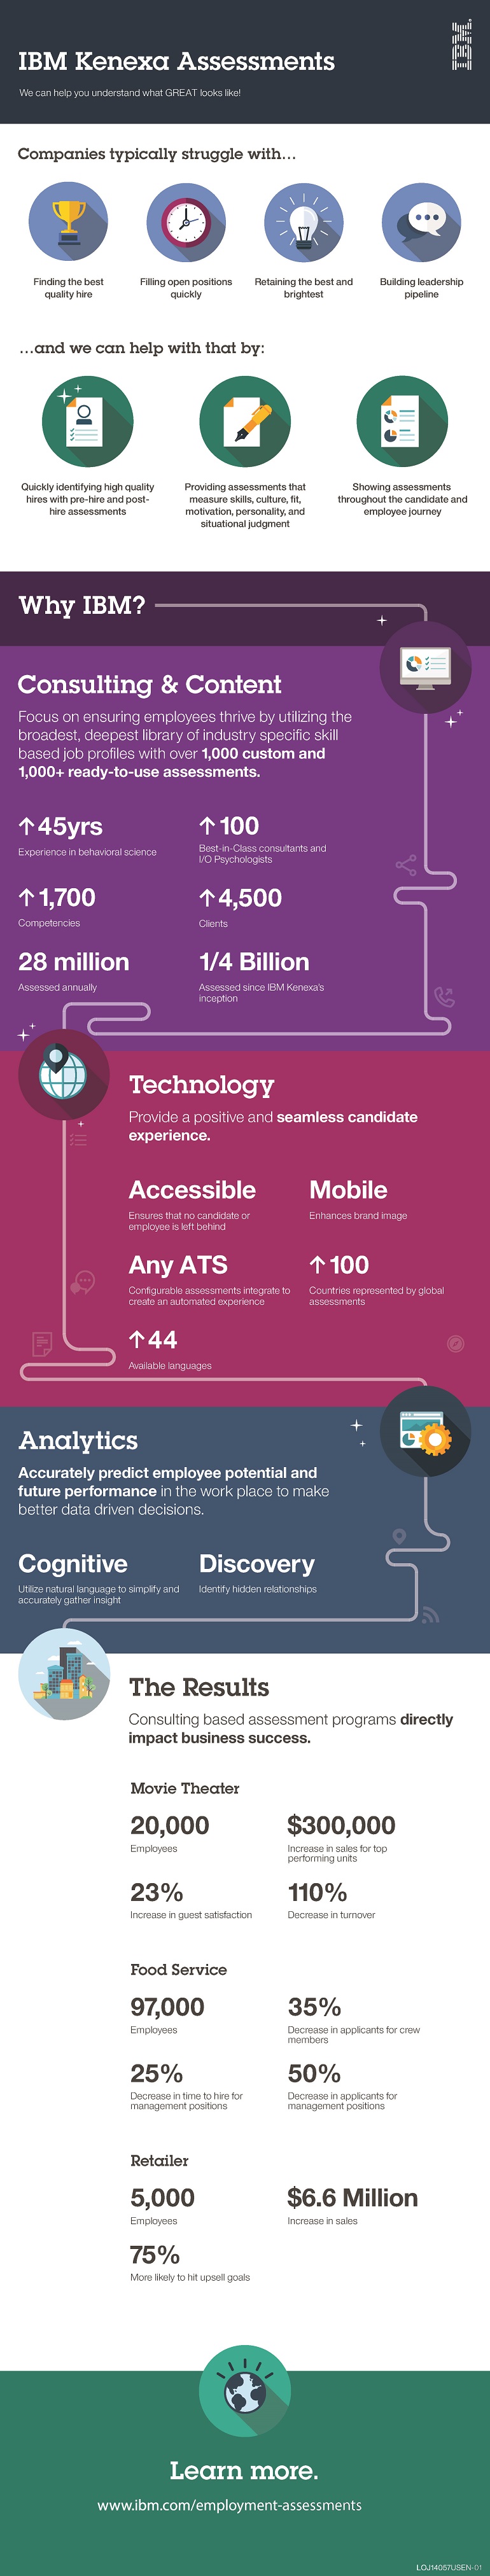 Article IBM Kenexa Assessments Infographic Image